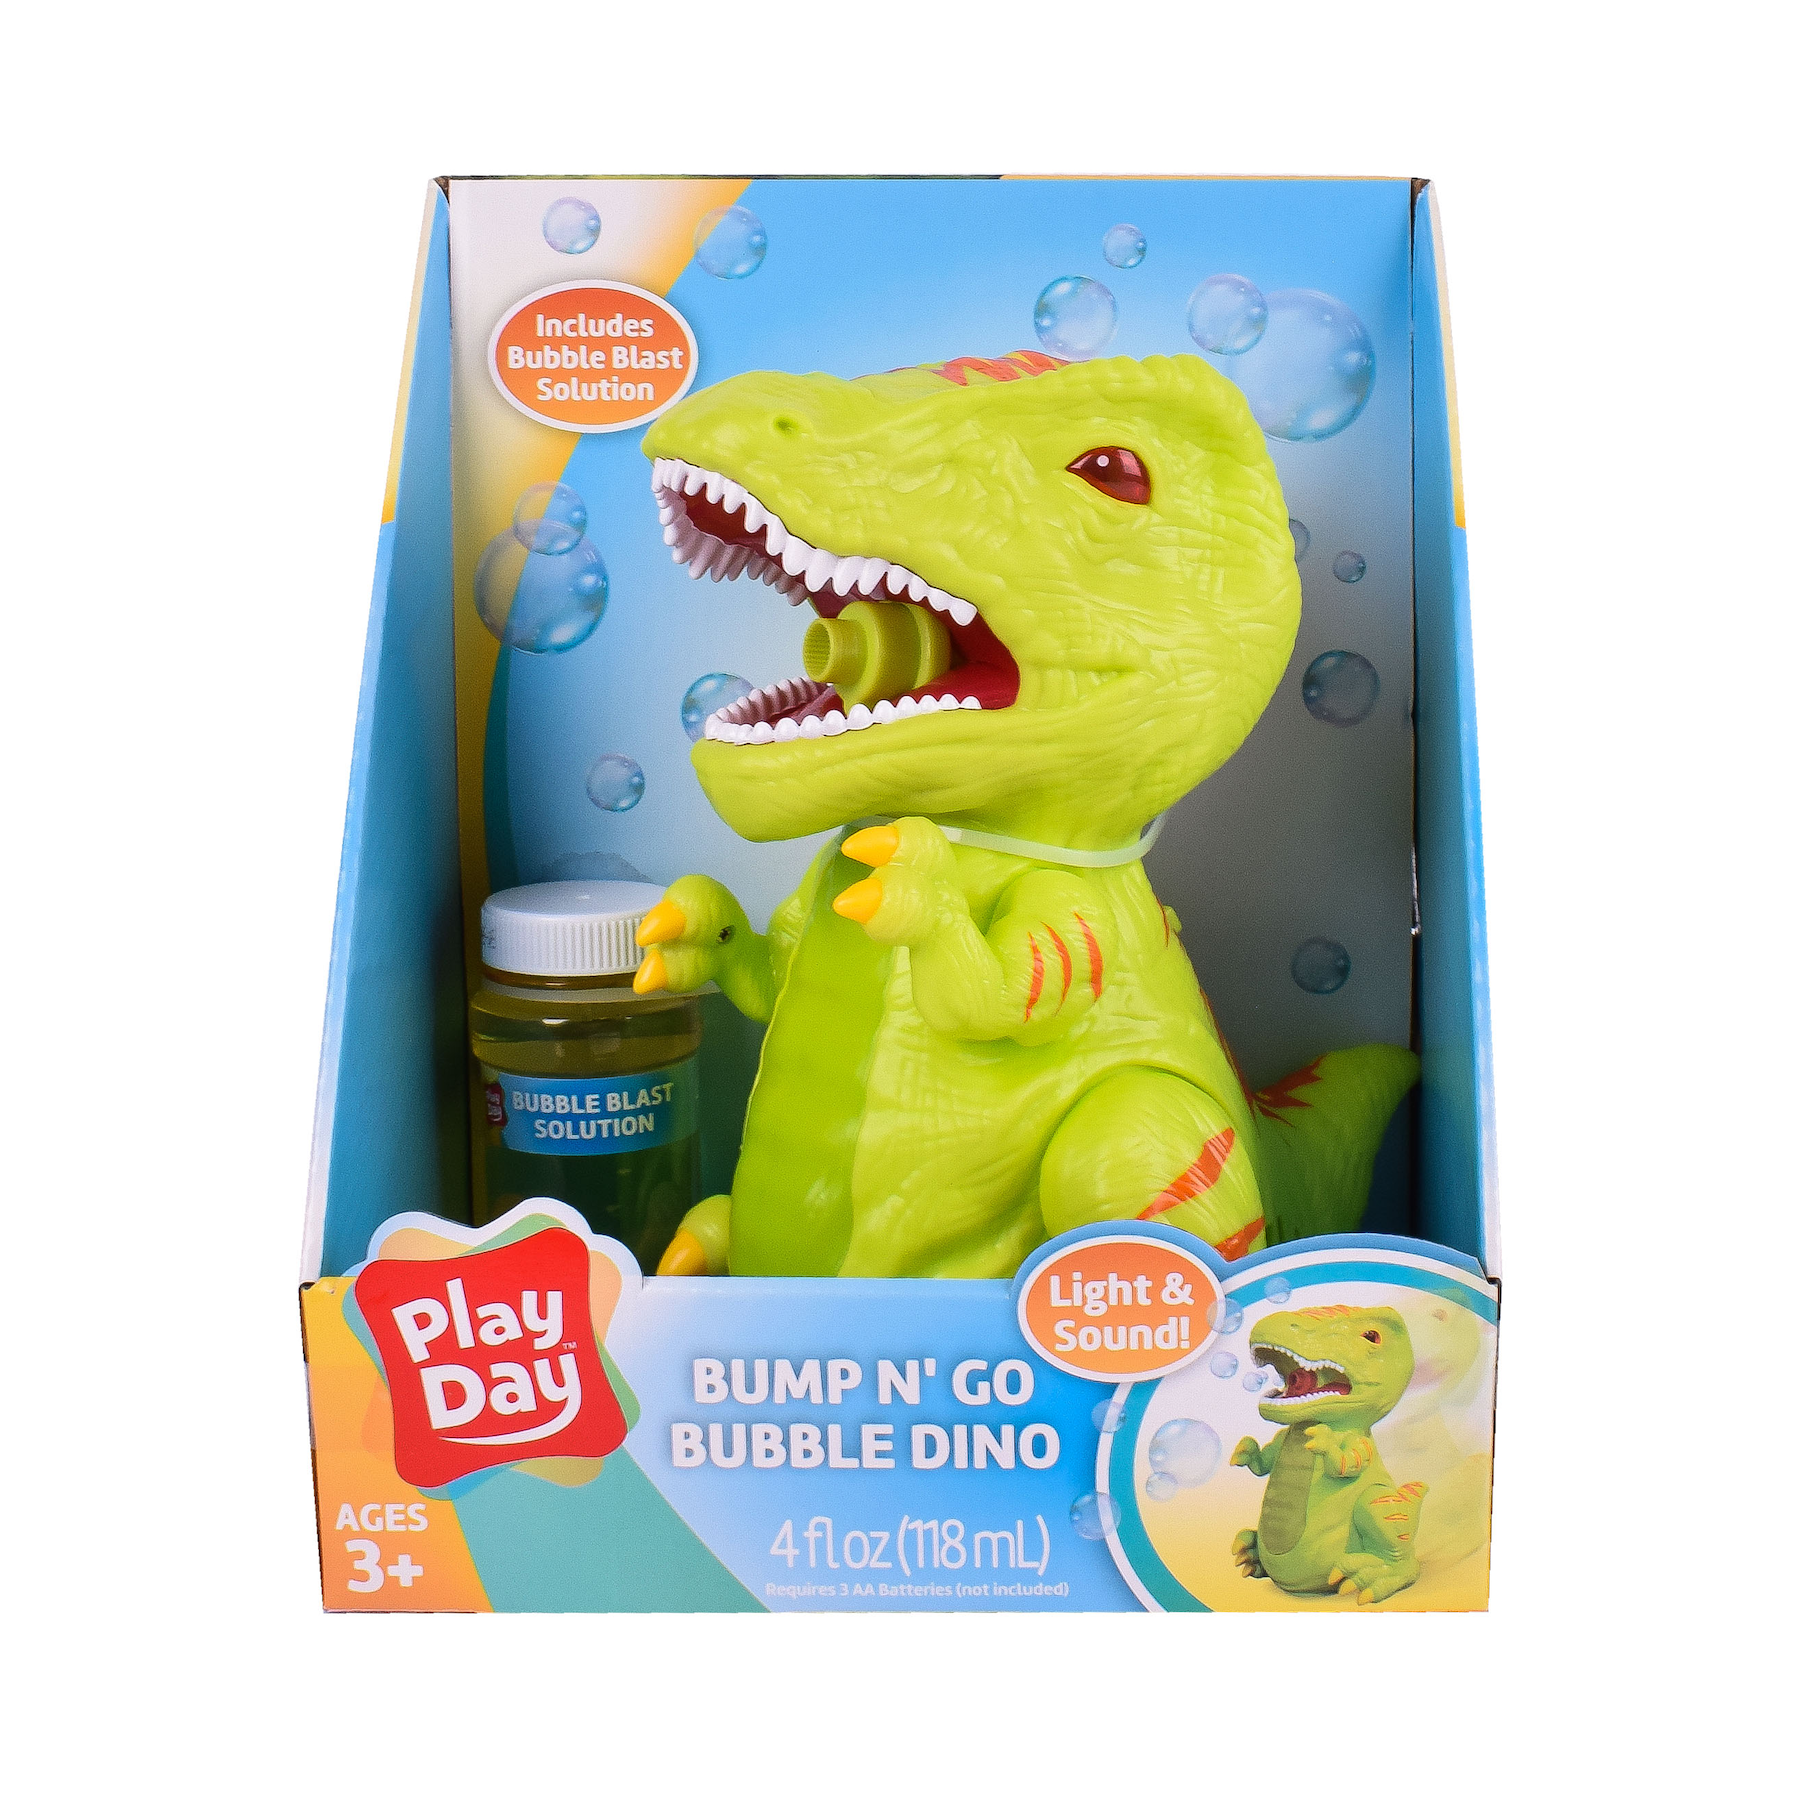 A dinosaur toy that blows bubbles